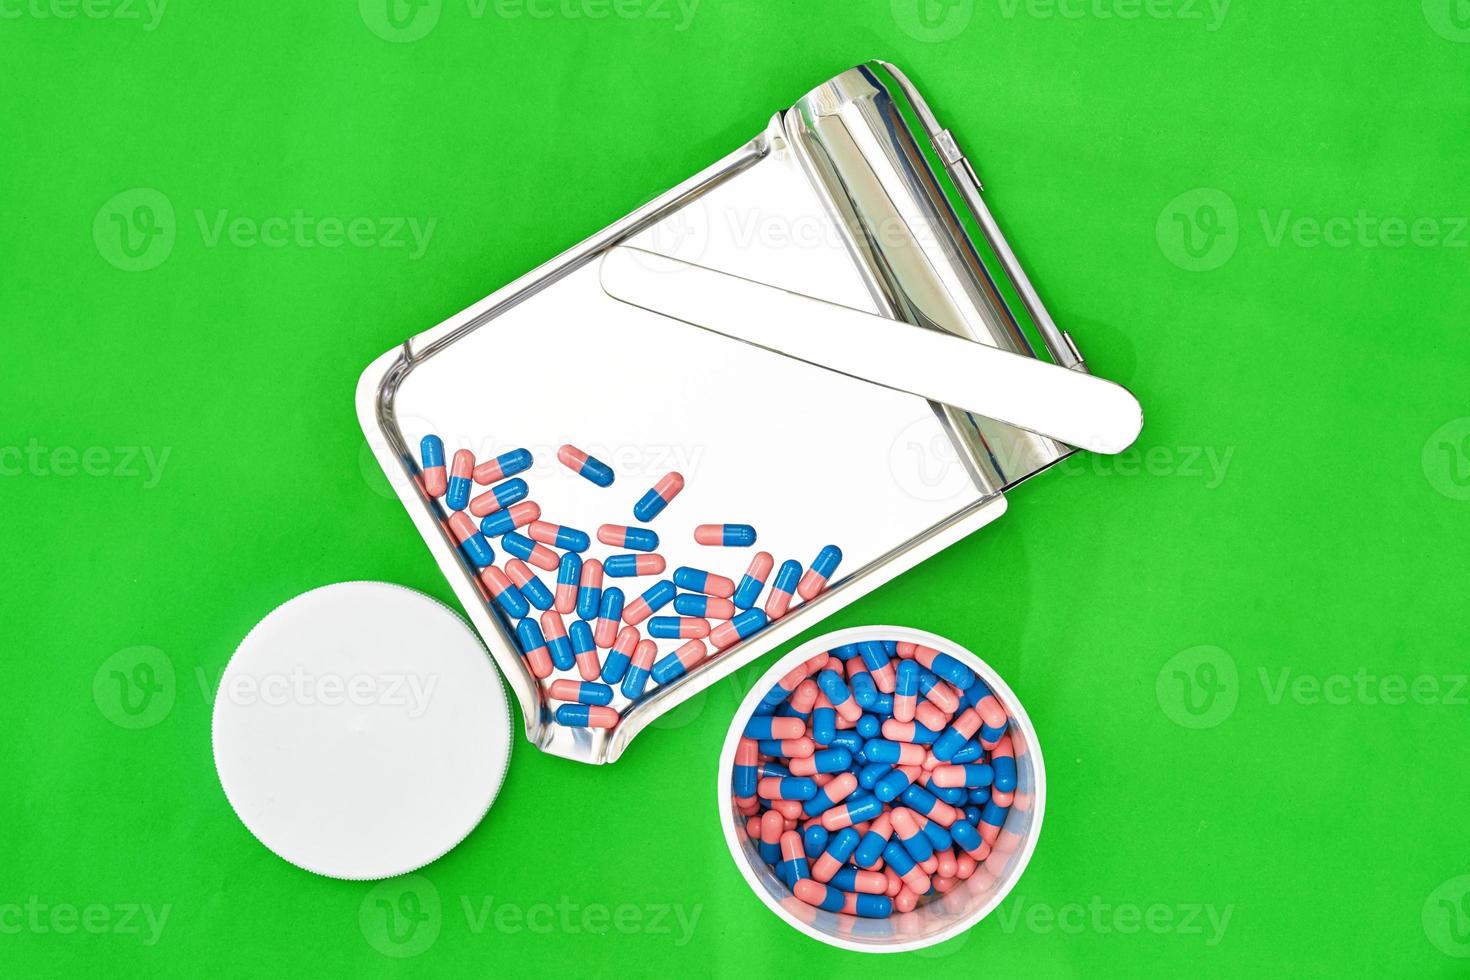 blauwe capsules op dienblad met pot in apotheekwinkel op groene achtergrond foto